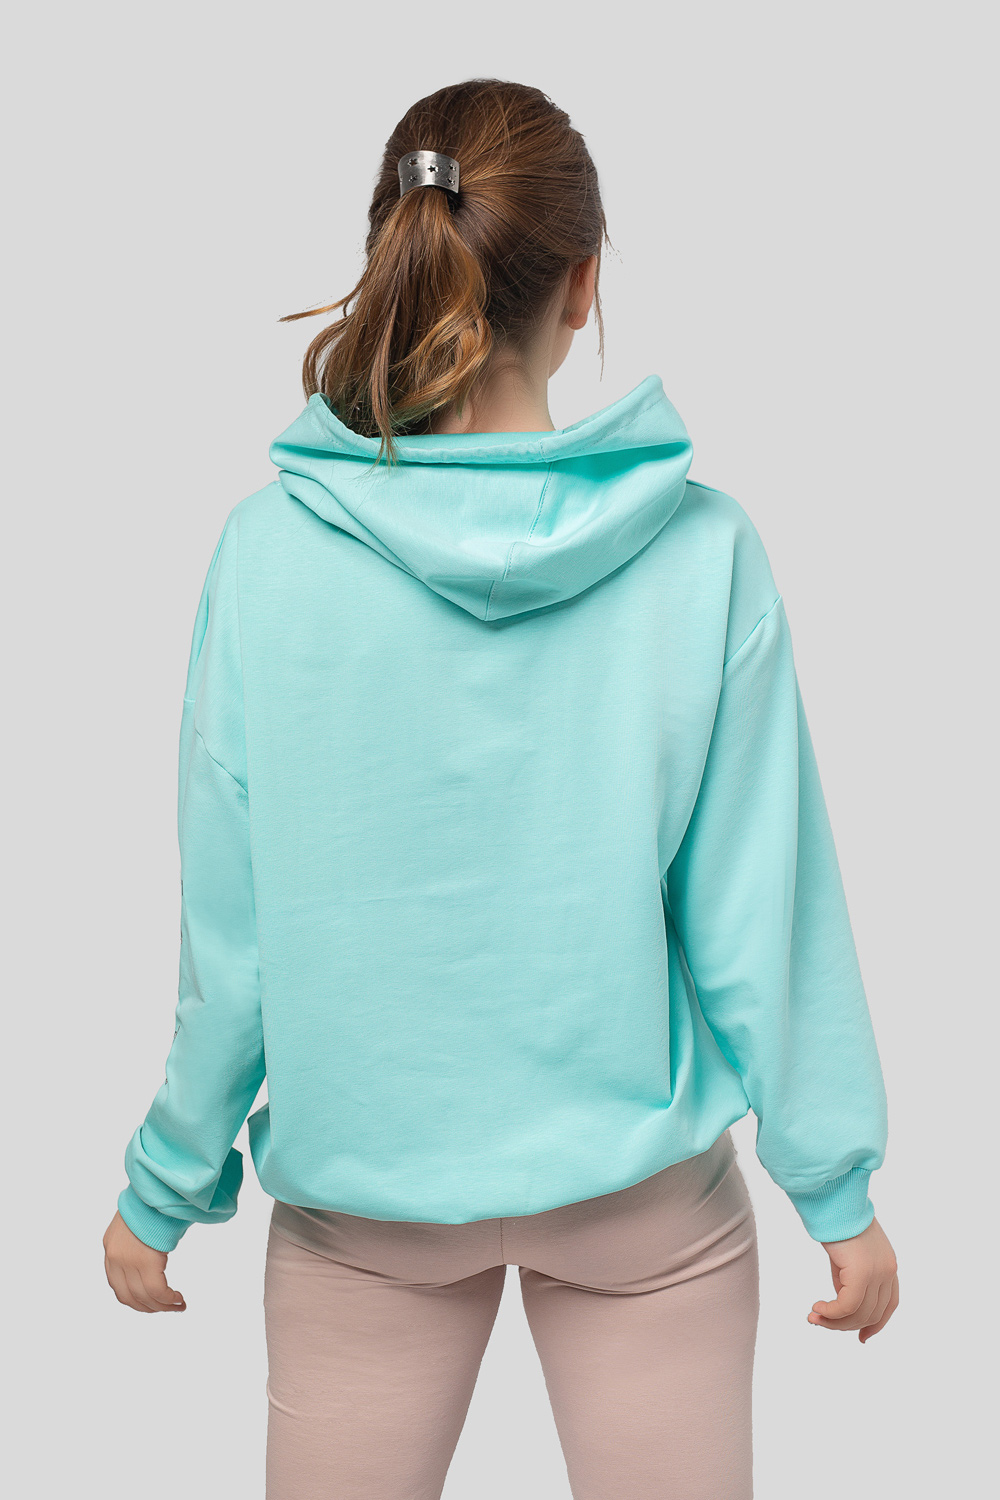 Turquoise hoodie with hood